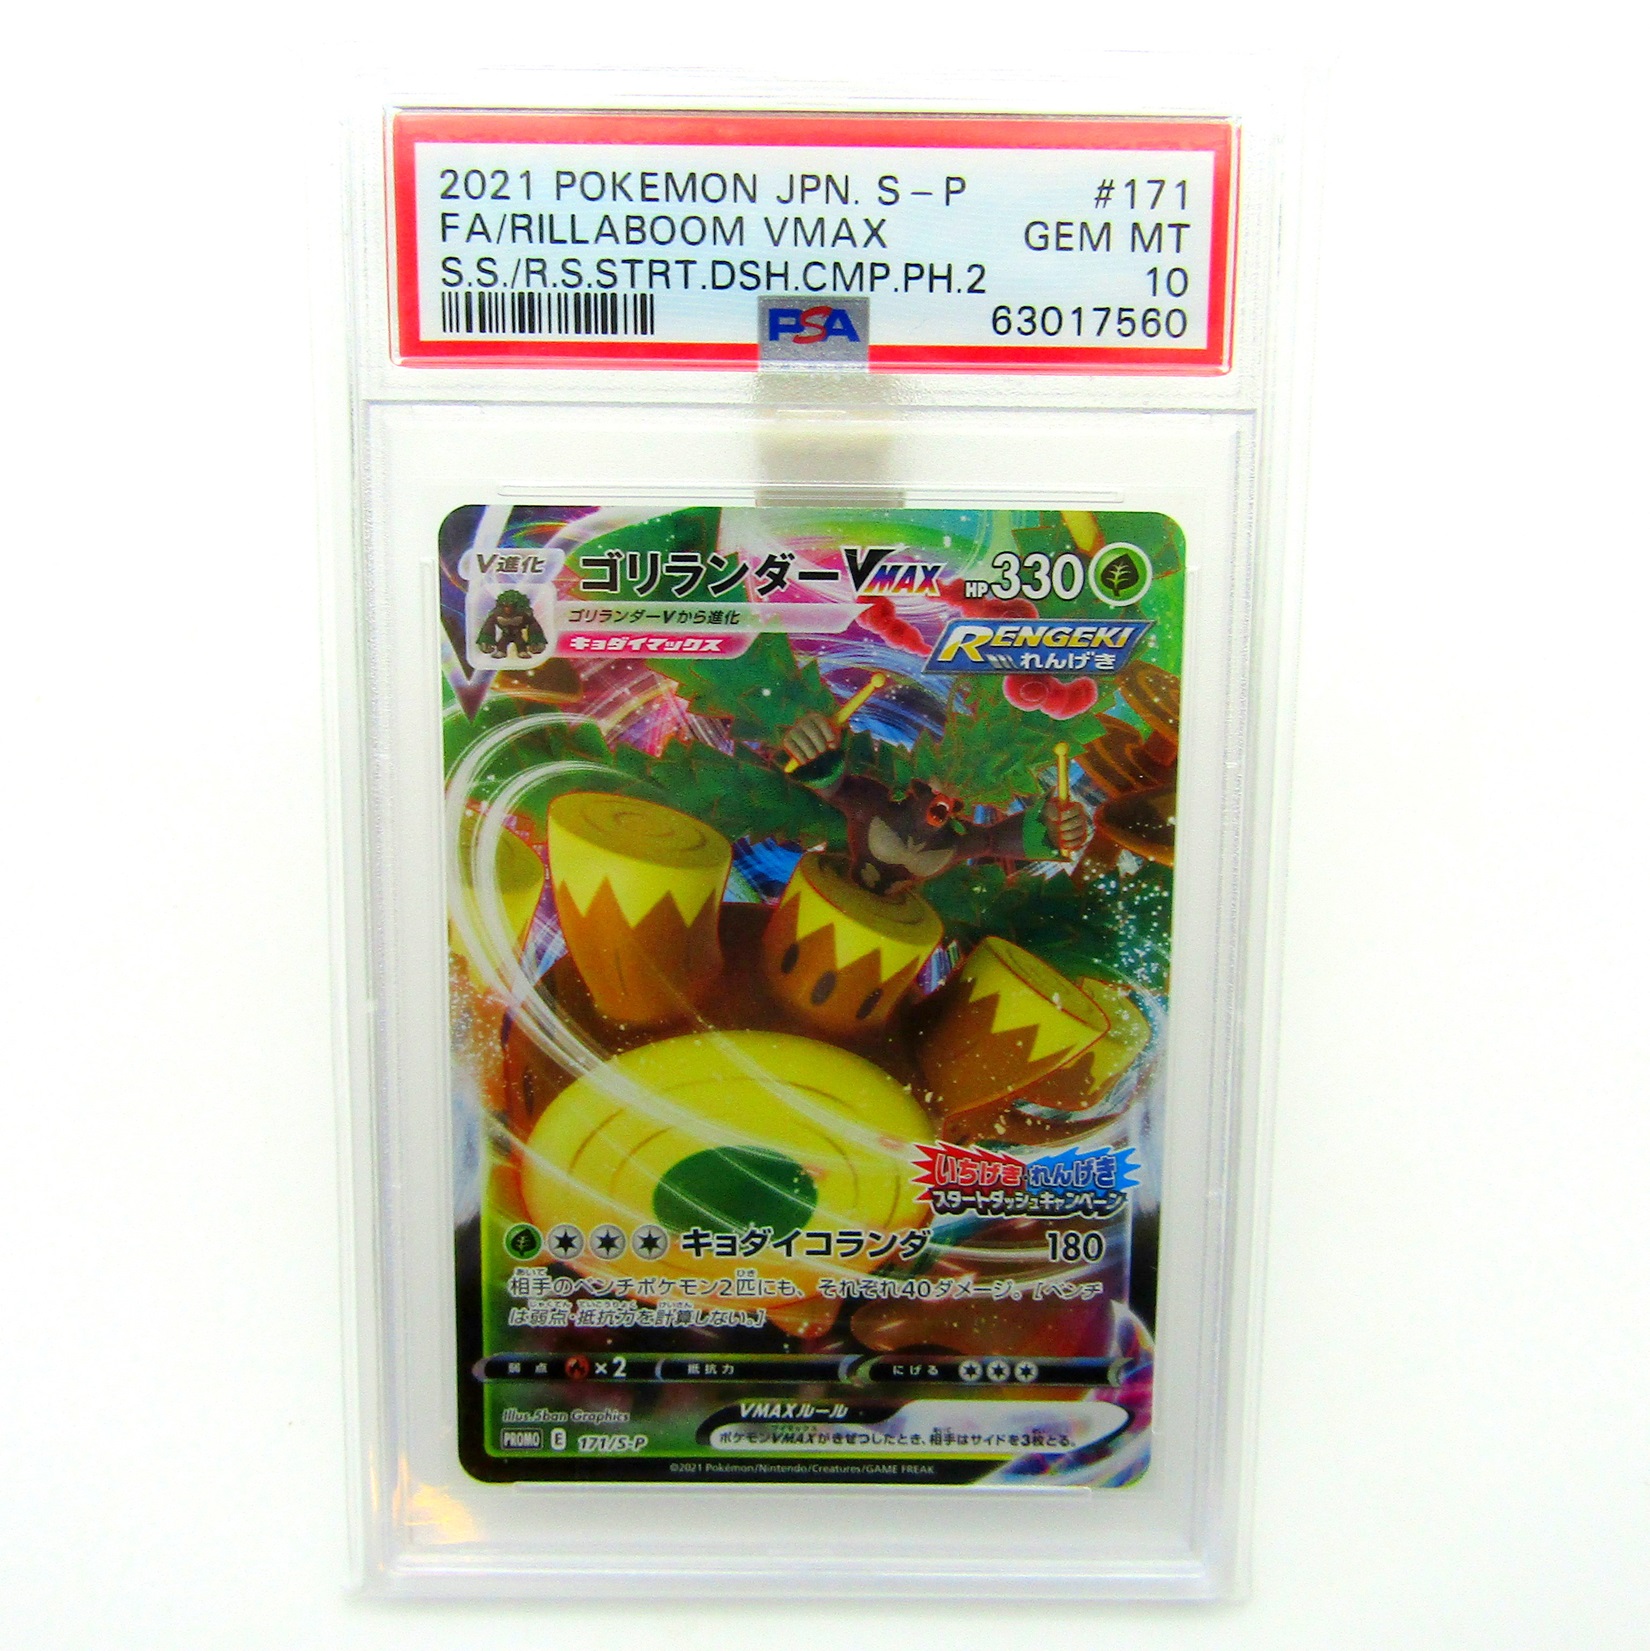 Pokémon Card. 2021. JPN. Rillaboom VMAX. 171/S-P. Promo. PSA 10